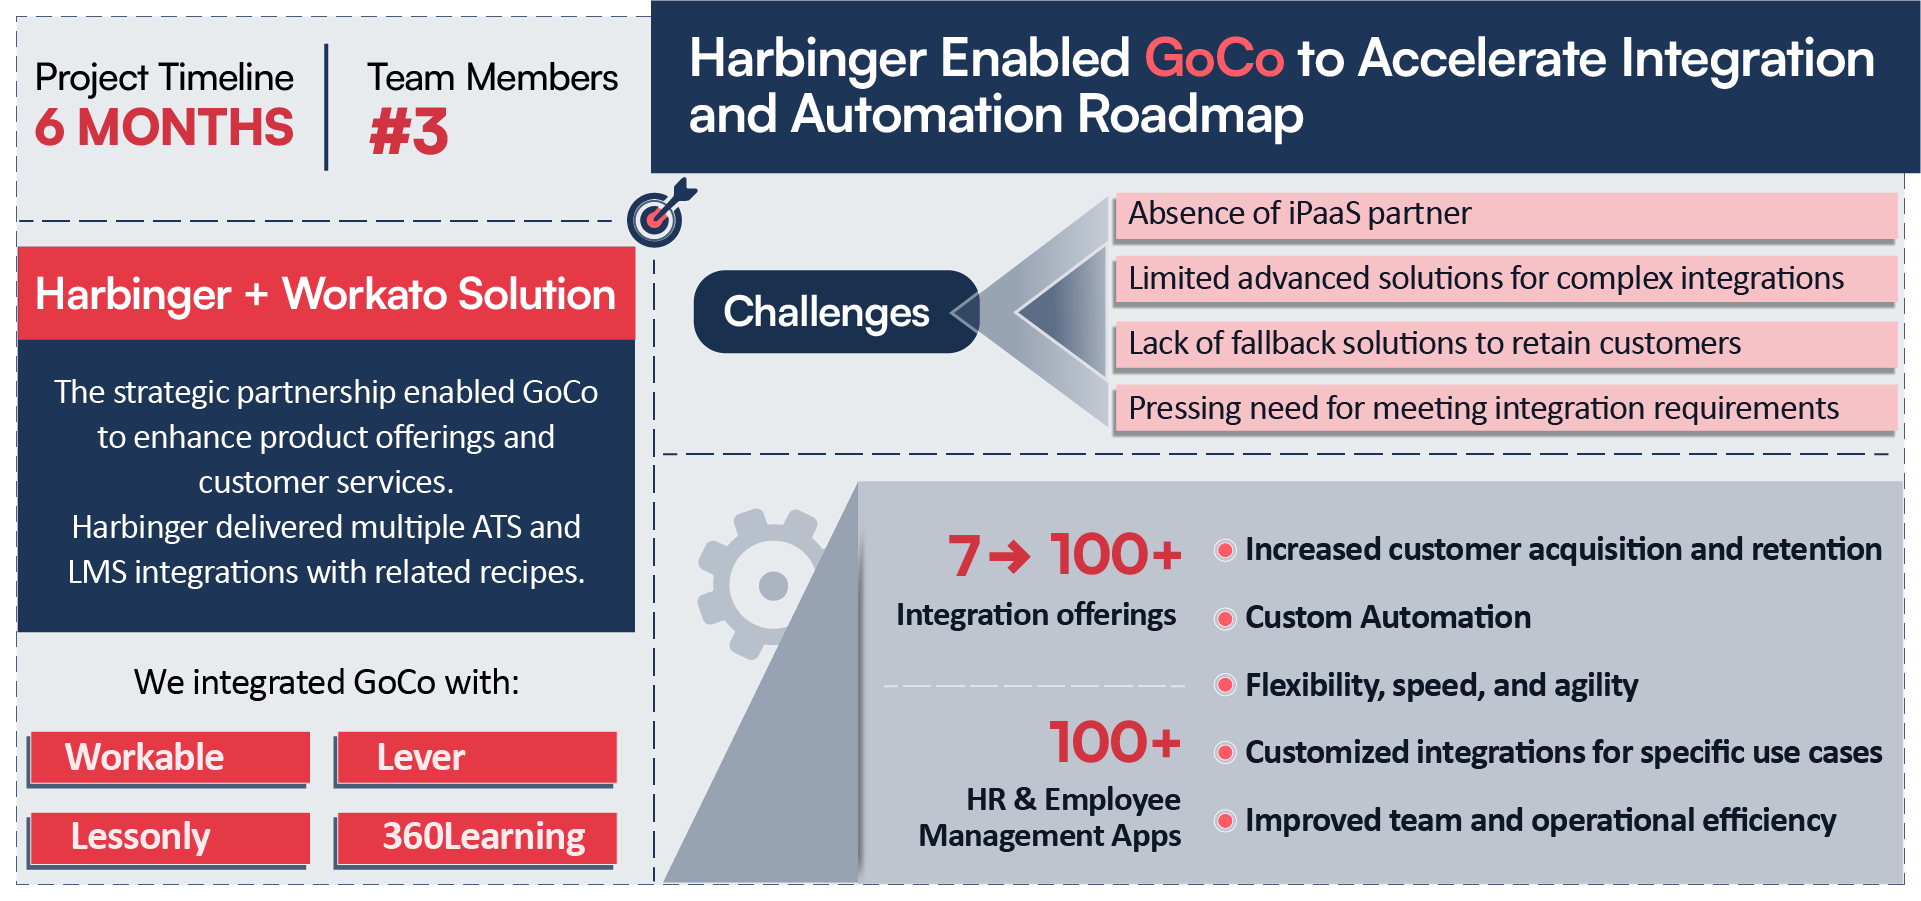 Harbinger Enabled GoCo To Accelerate Integration